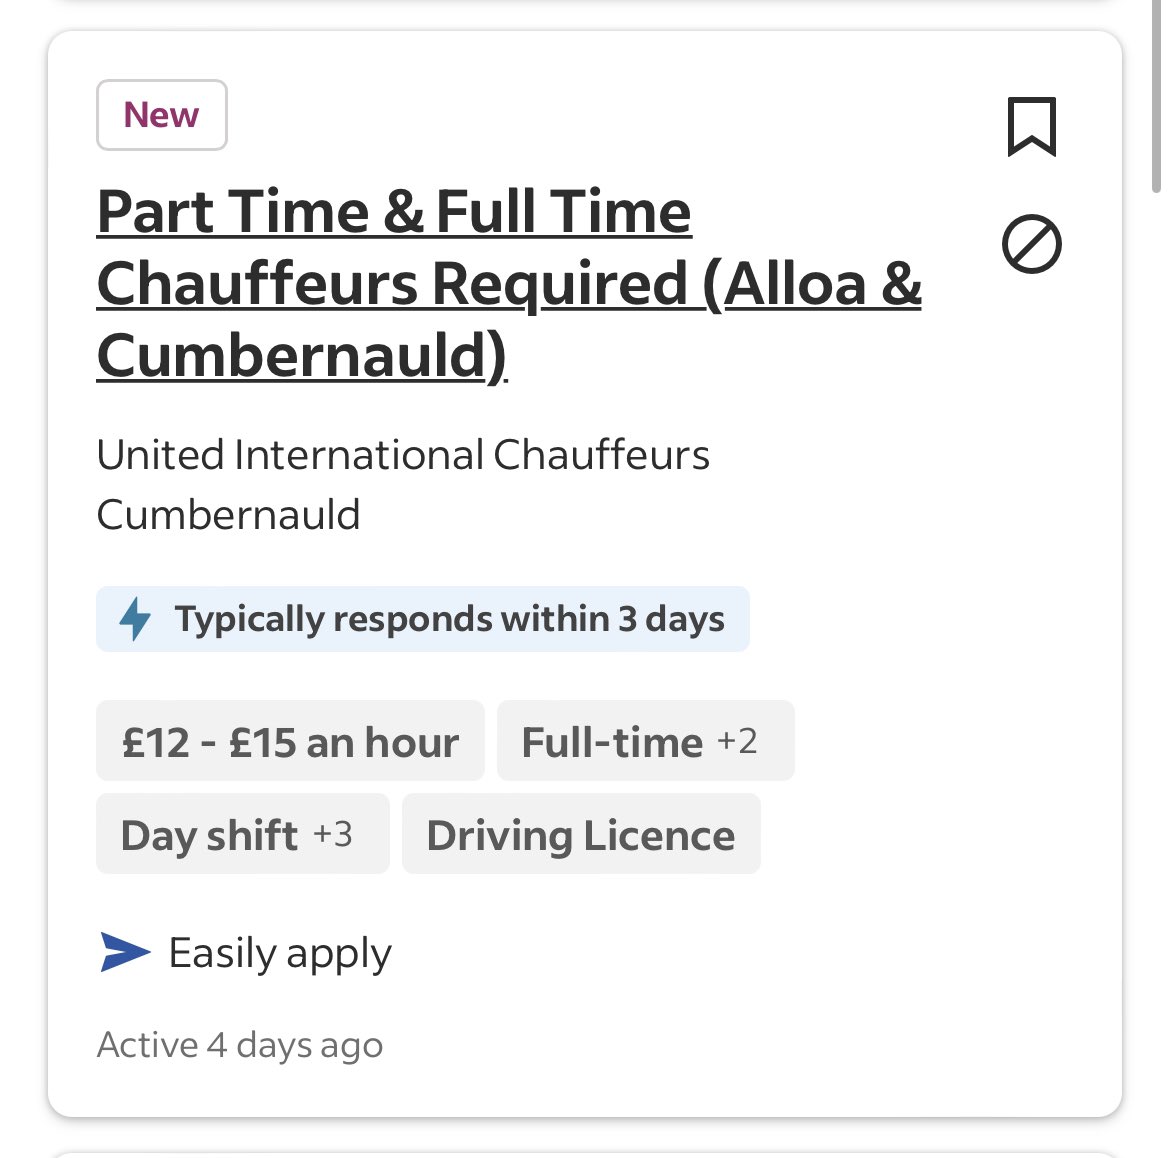 nobody who lives in cumbernauld is needing a chauffeur ffs